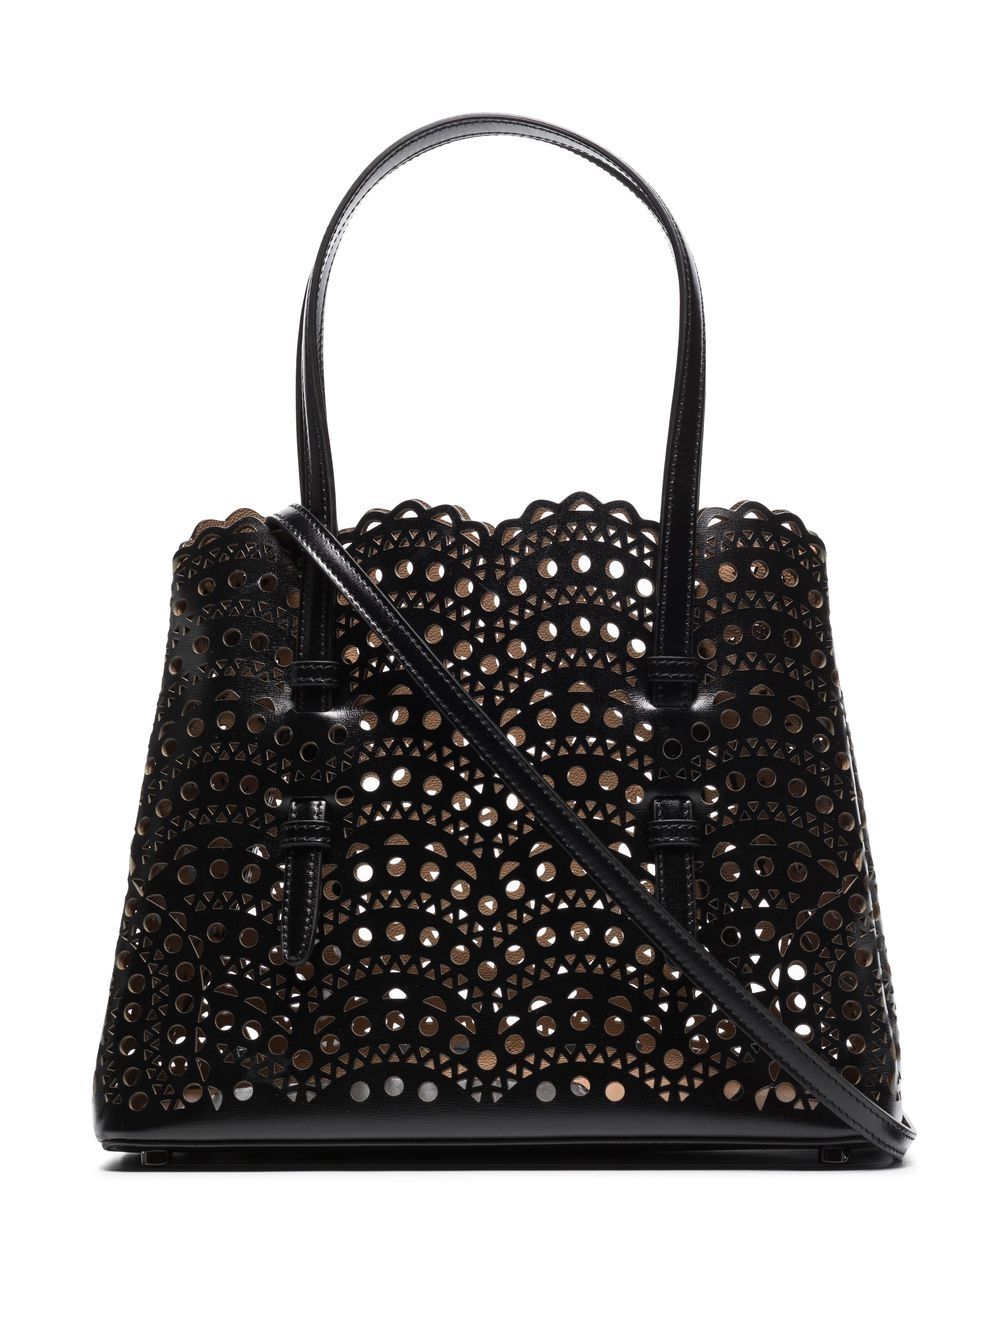 ALAIA Black Cut-Out Leather Handbag for Women